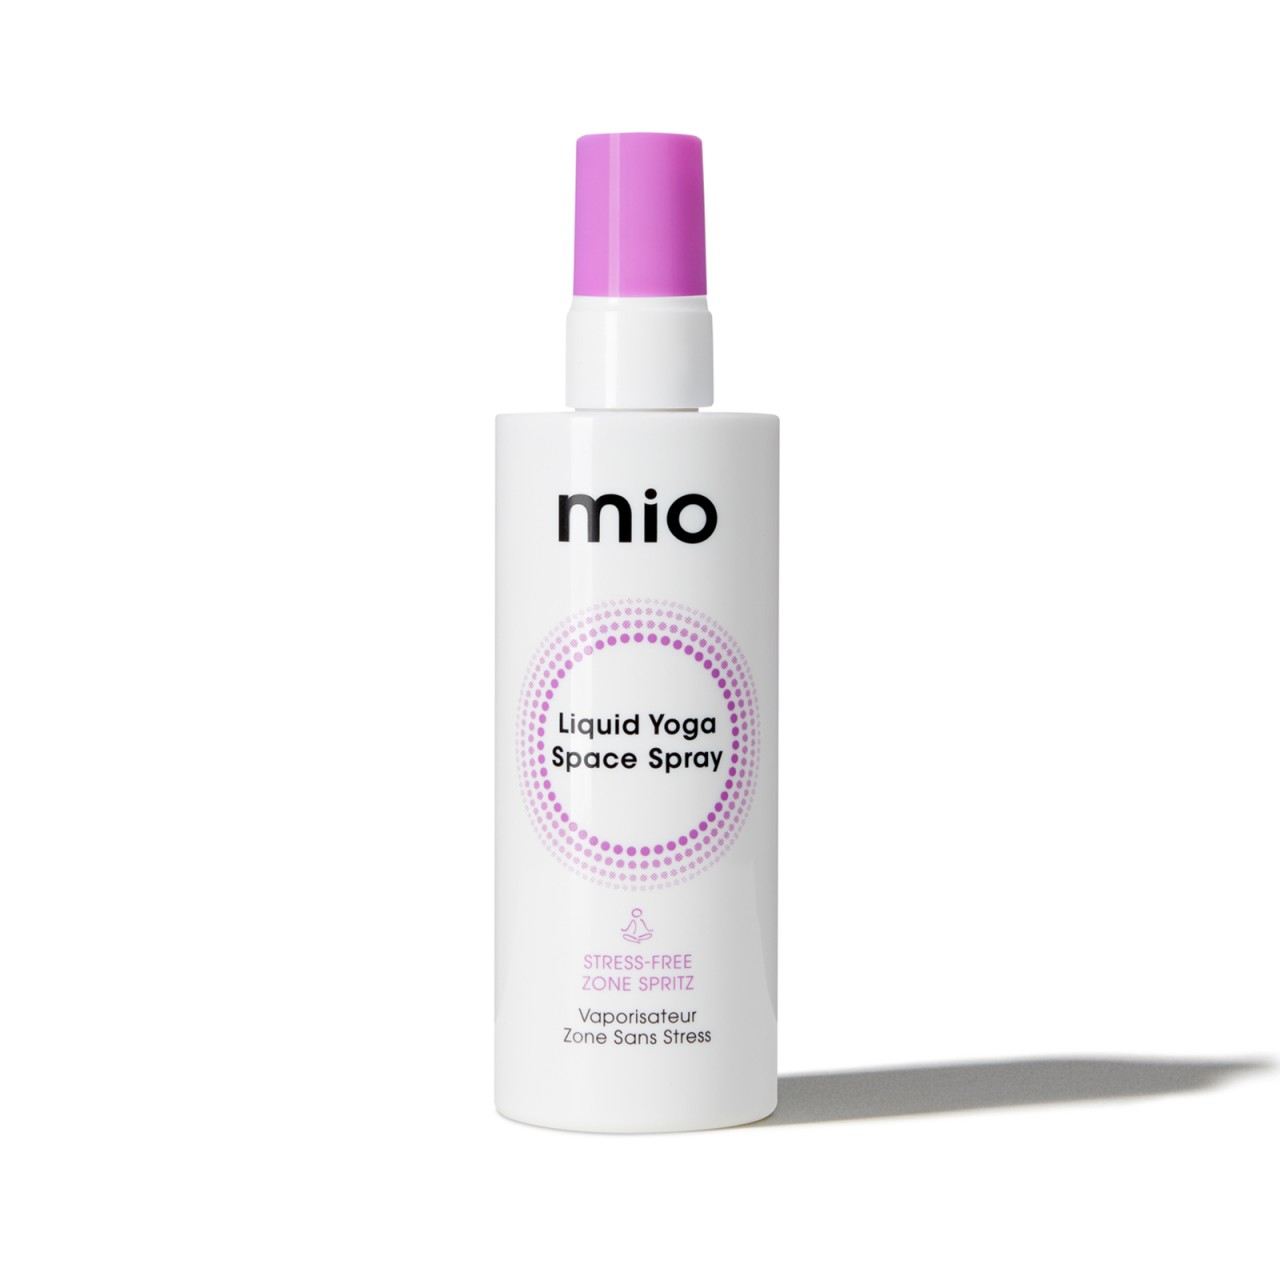 Mio - Liquid Yoga Space Spray - 